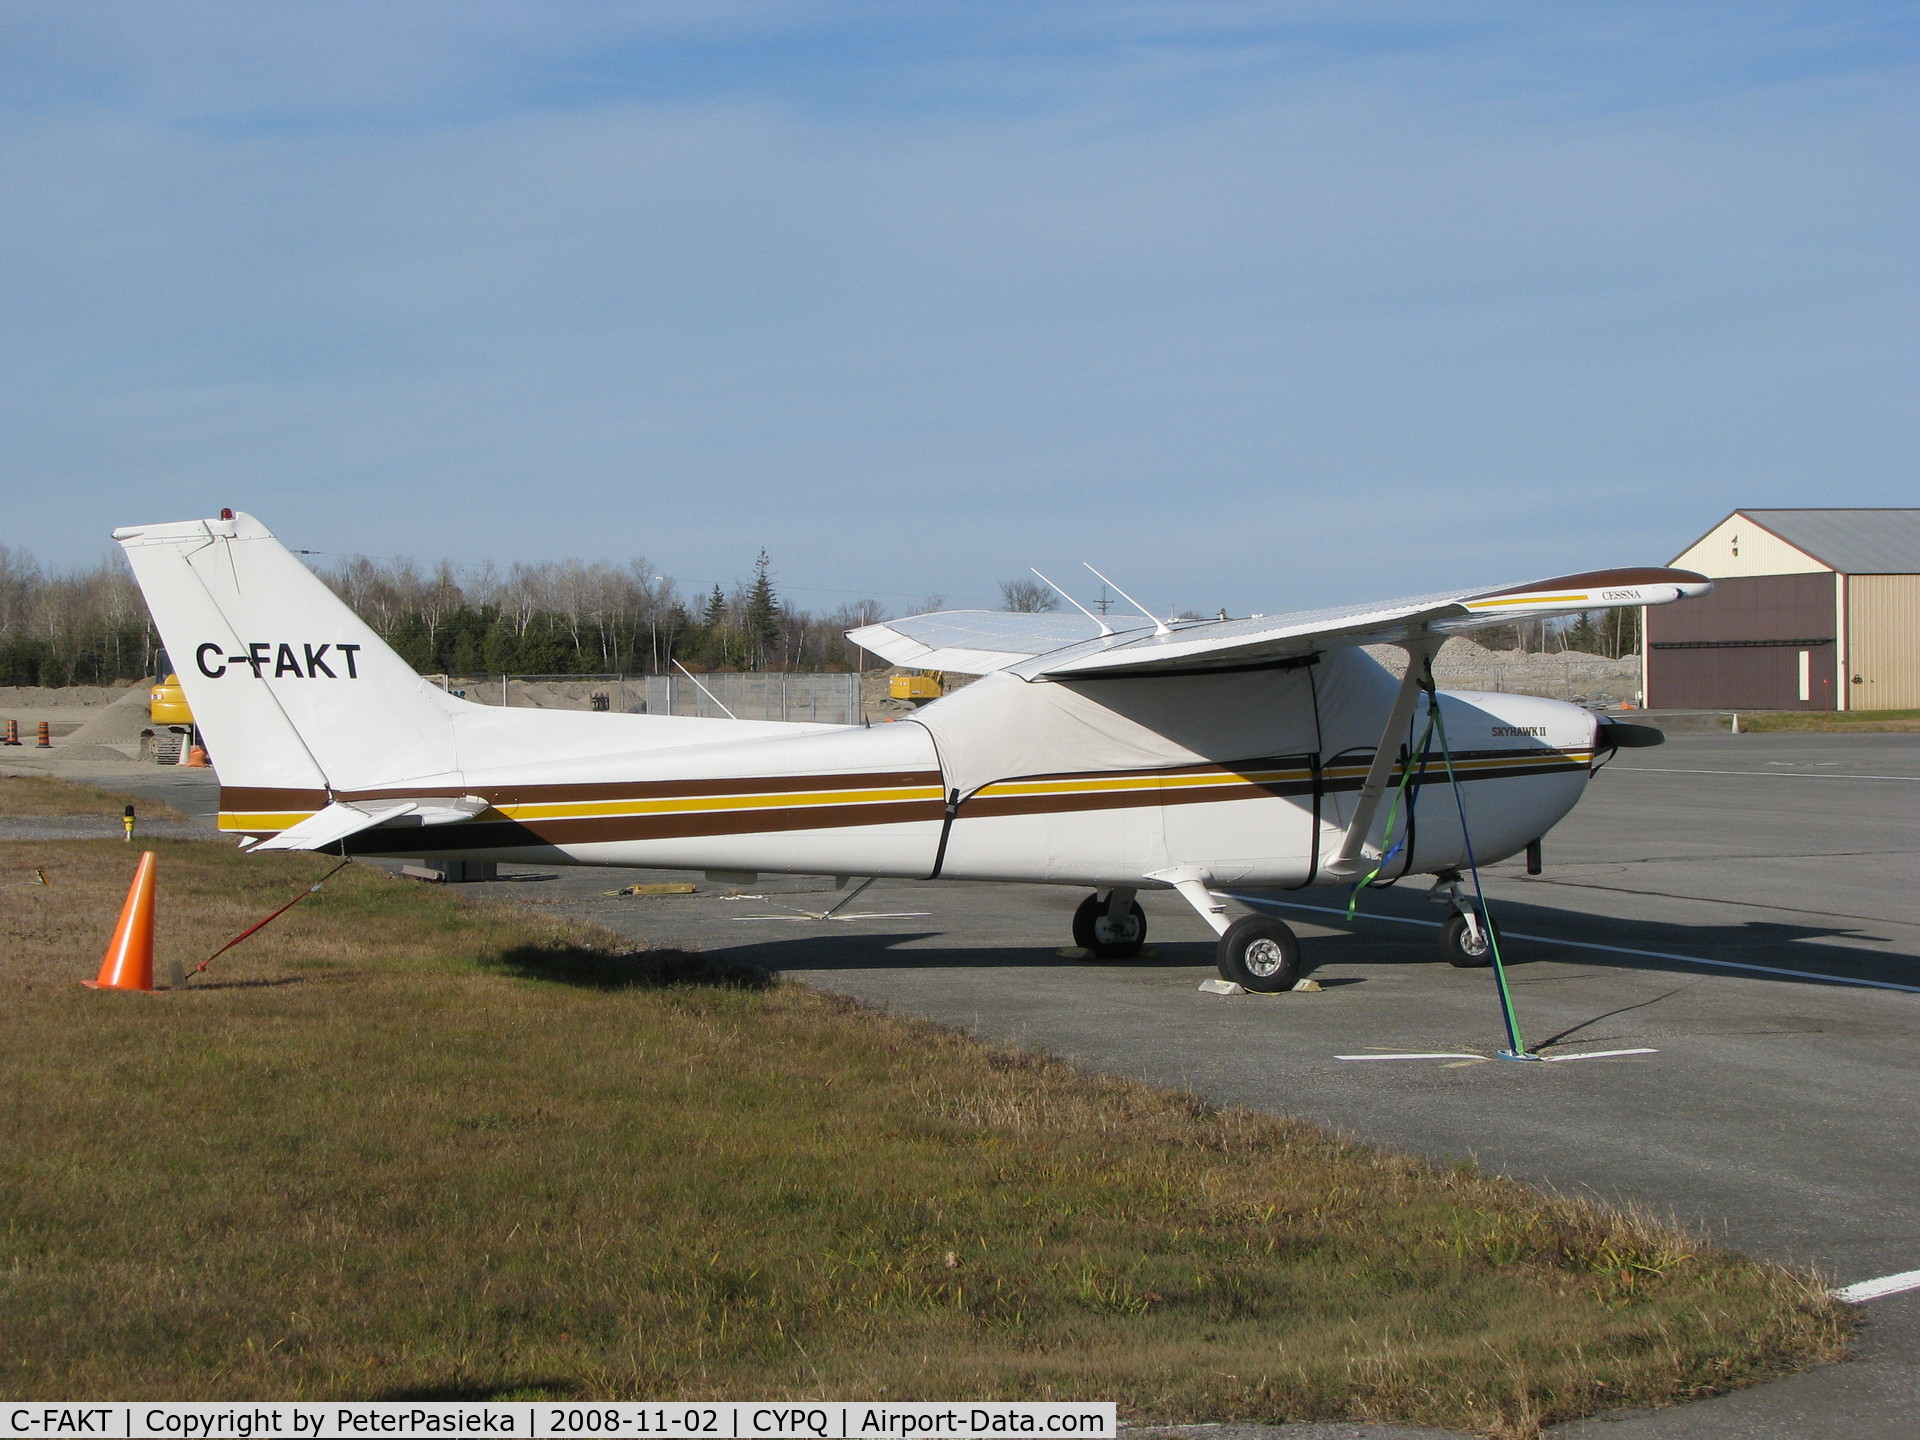 Aircraft C-FAKT (1962 Cessna 172P C/N 17275221) Photo by PeterPasieka  (Photo ID: AC245717)